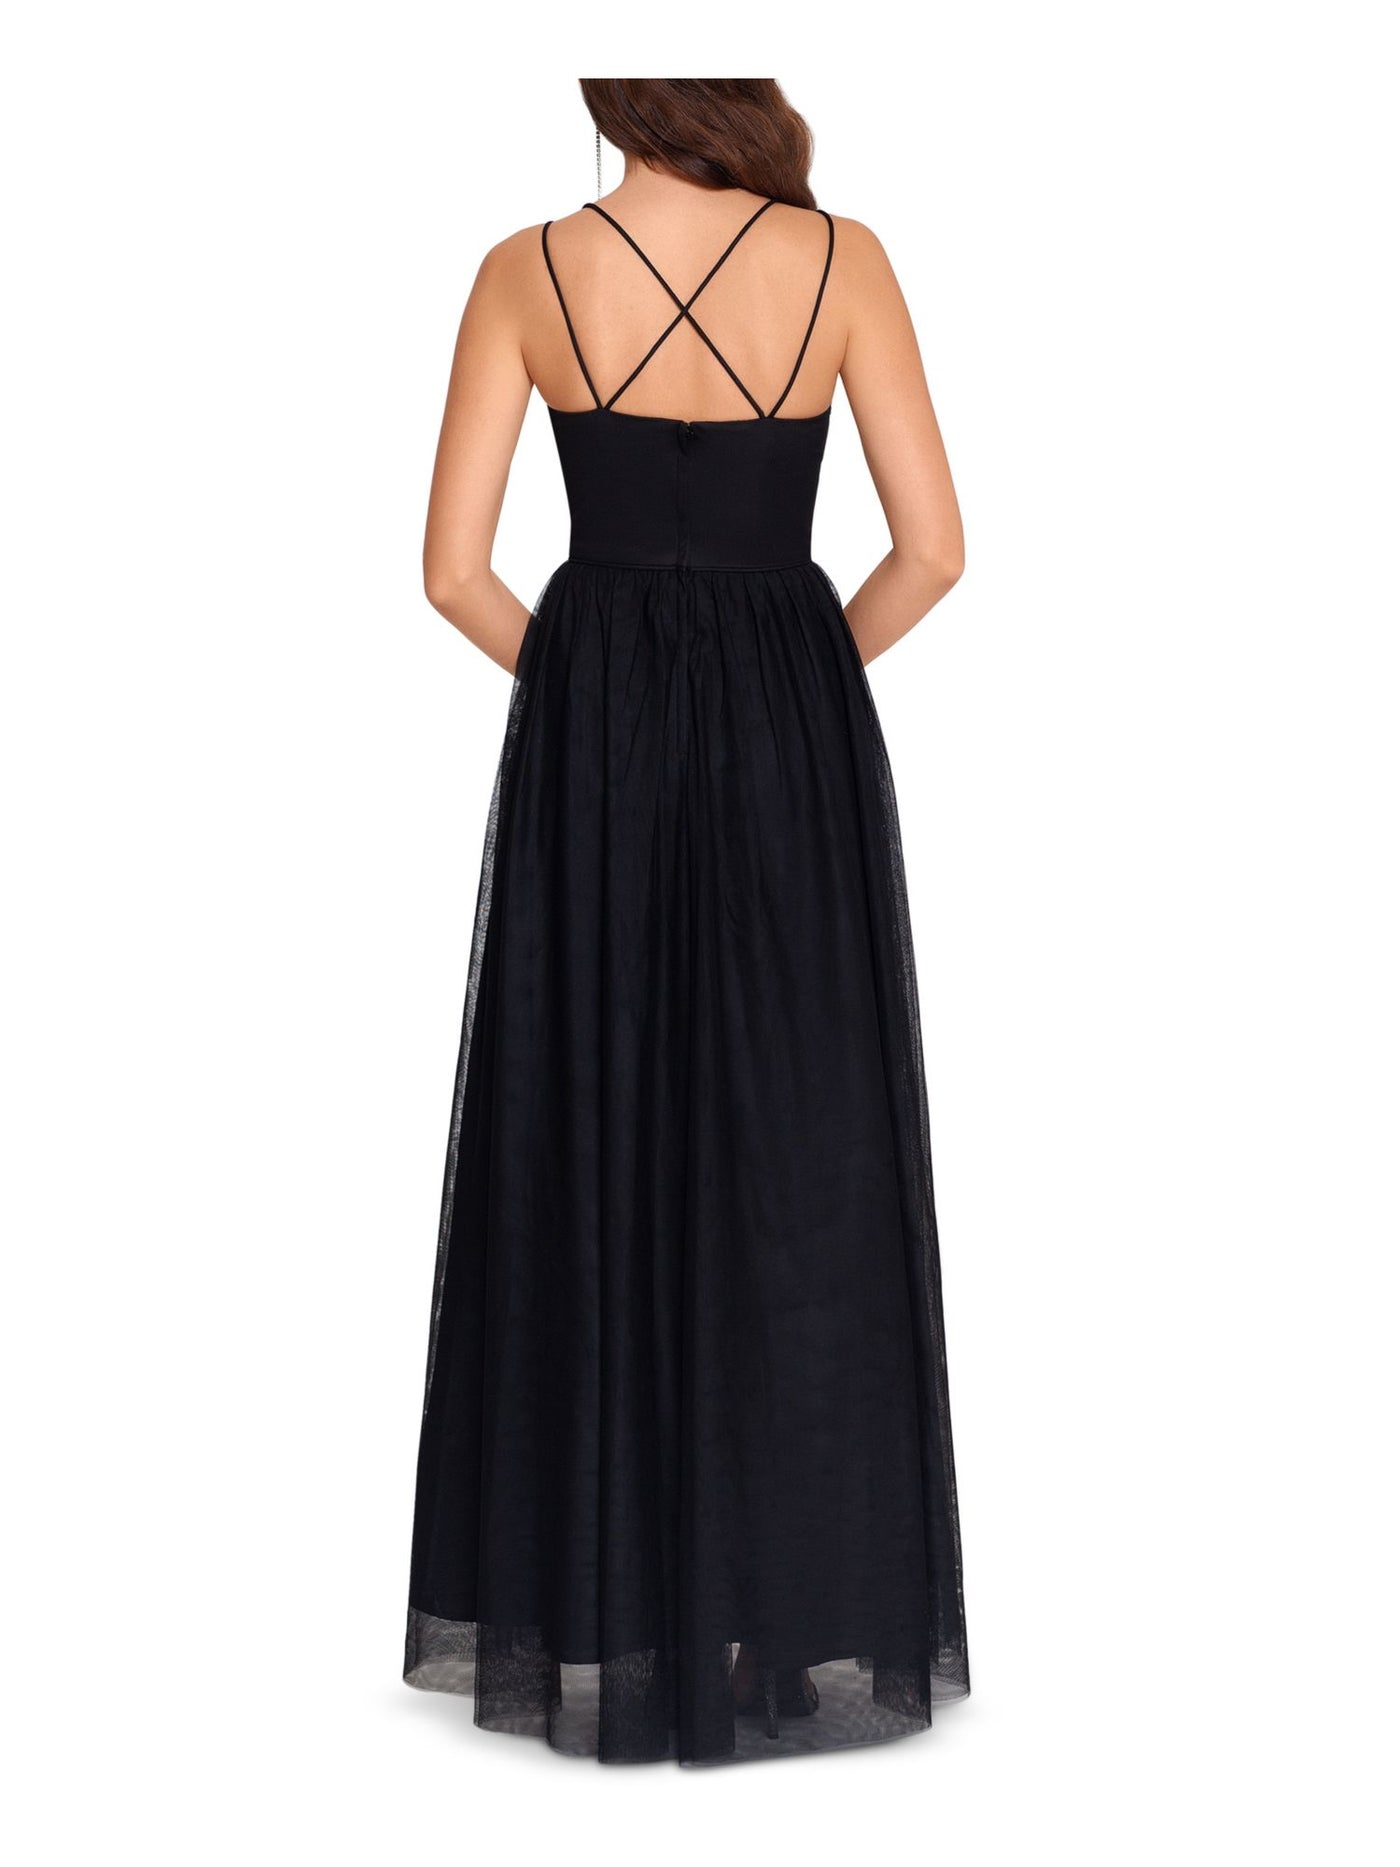 BLONDIE Womens Black Embellished Spaghetti Strap Scoop Neck Full-Length Formal Fit + Flare Dress Juniors 1